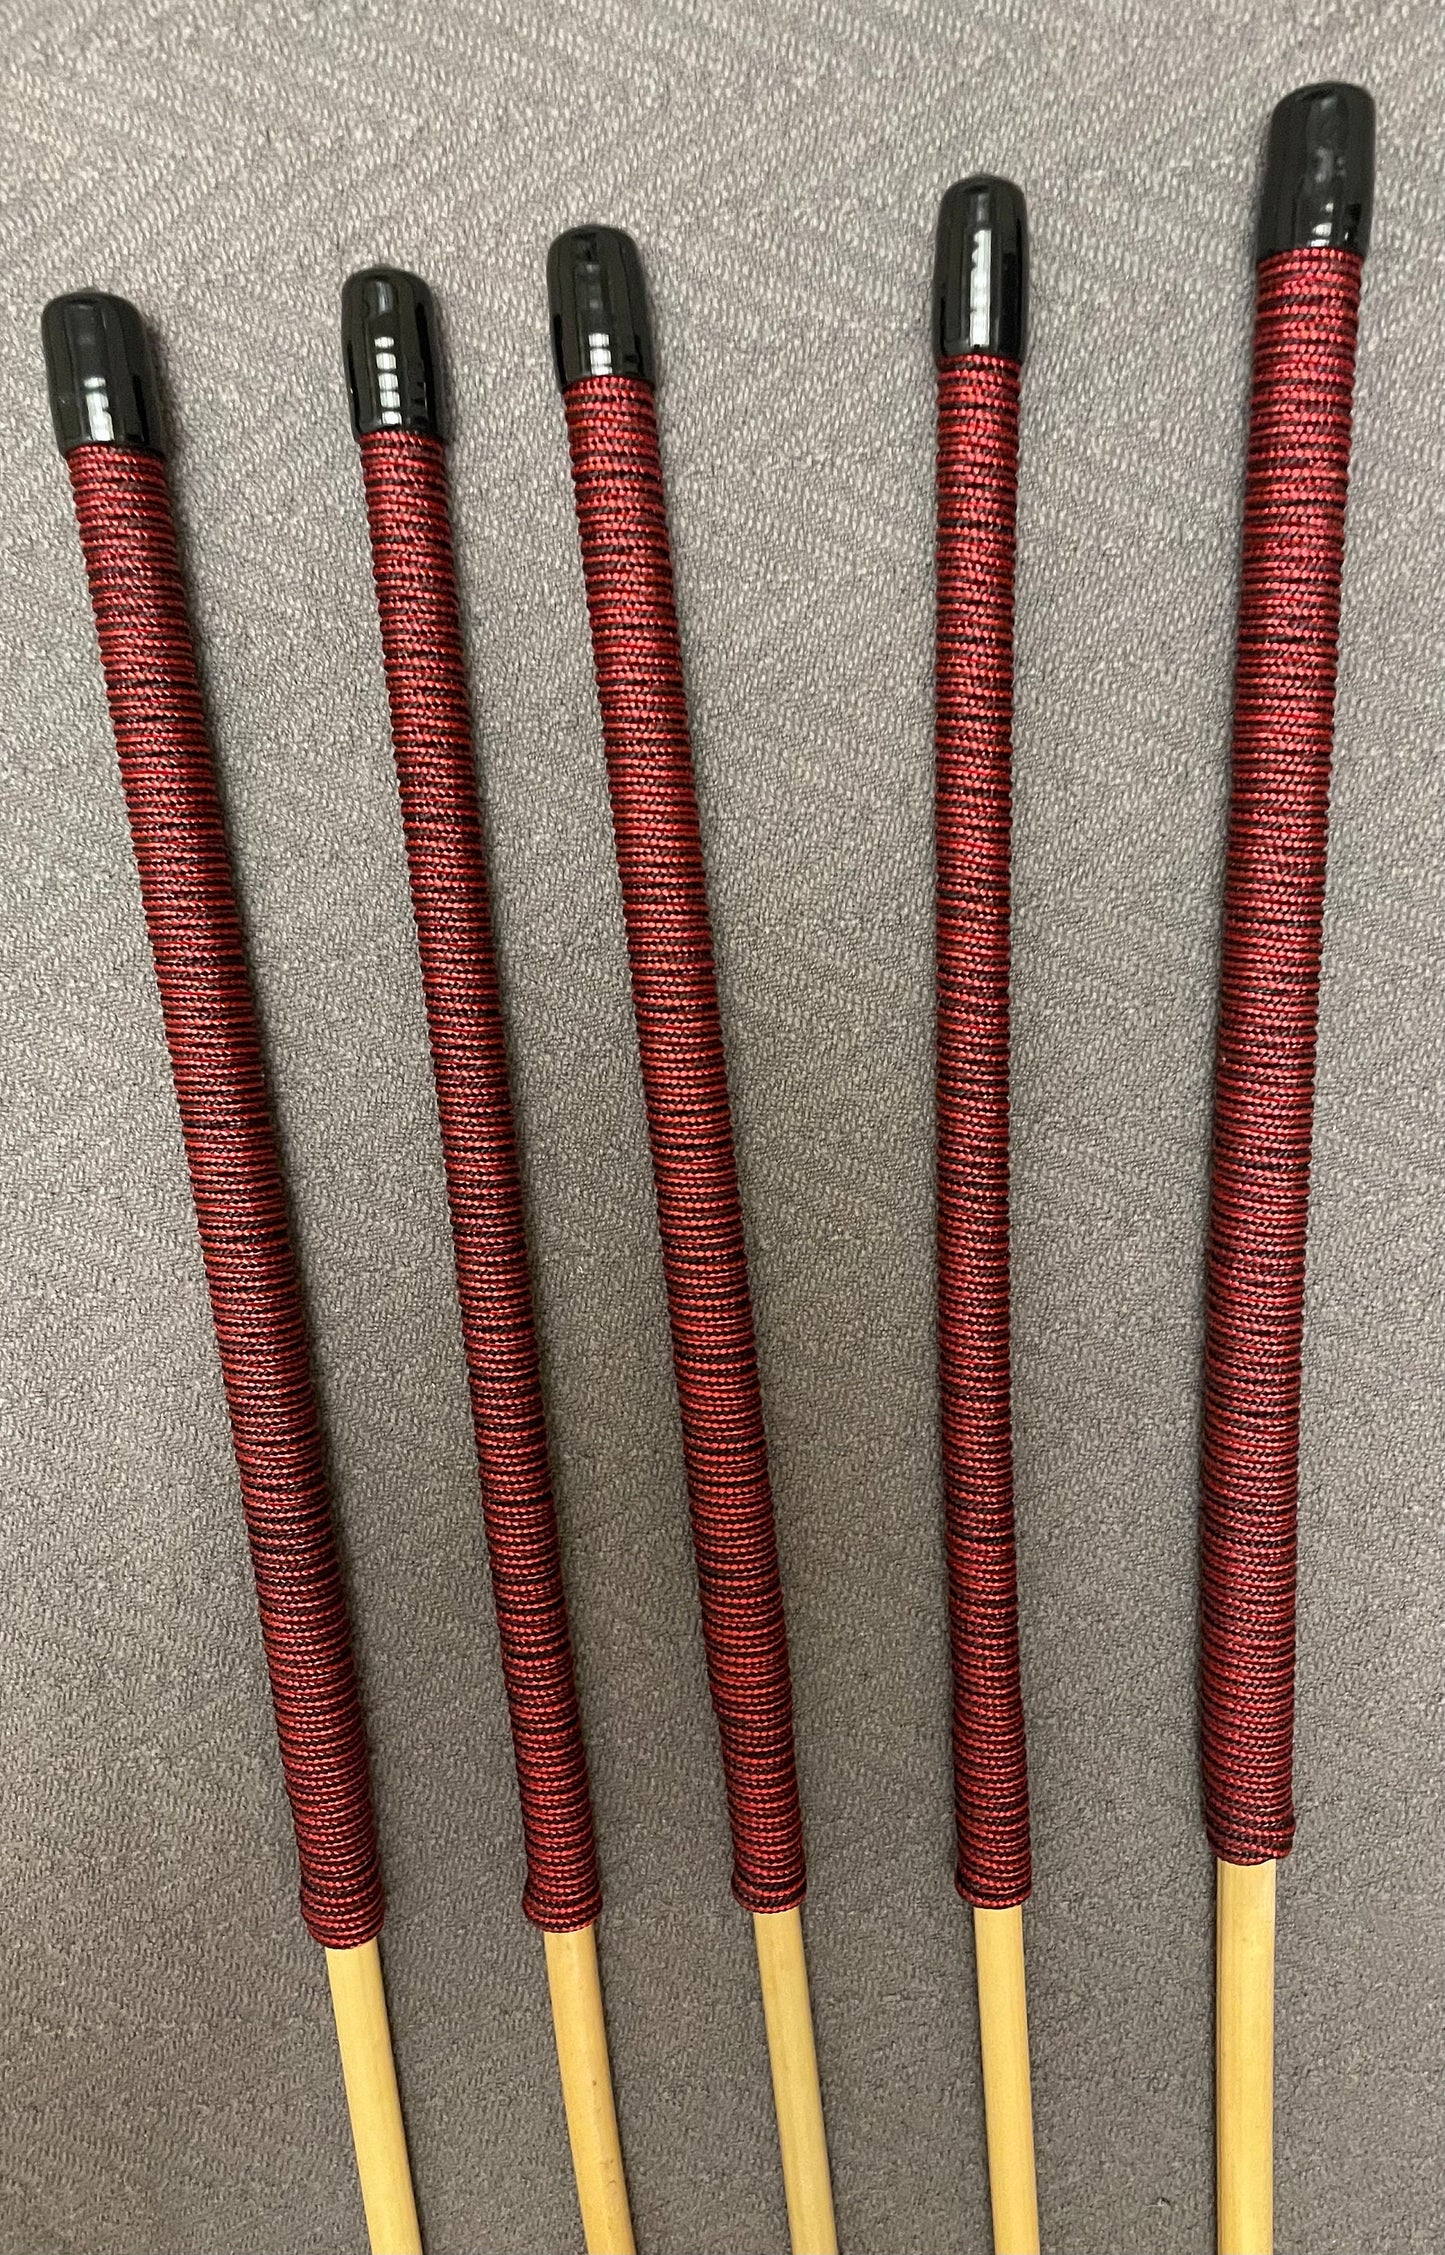 Knotless Dragon Canes / No Knot Dragon Canes /  School Canes Quintet Set of 5  - 82-84 cms L  & 8-8.5/9-9.5/10-10.5/11-11.5/12-12.5 mm D - LIQUORICE Paracord Handles